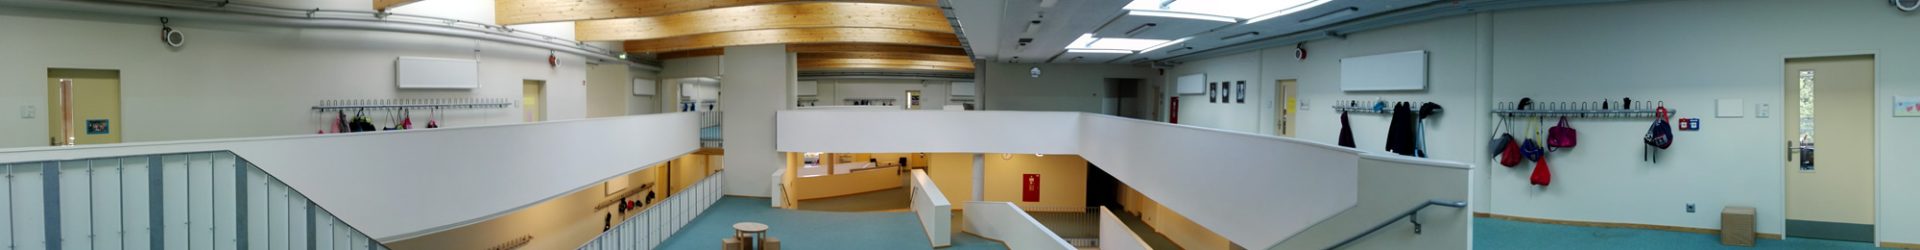 Grundschule Am Johannisland Neugraben